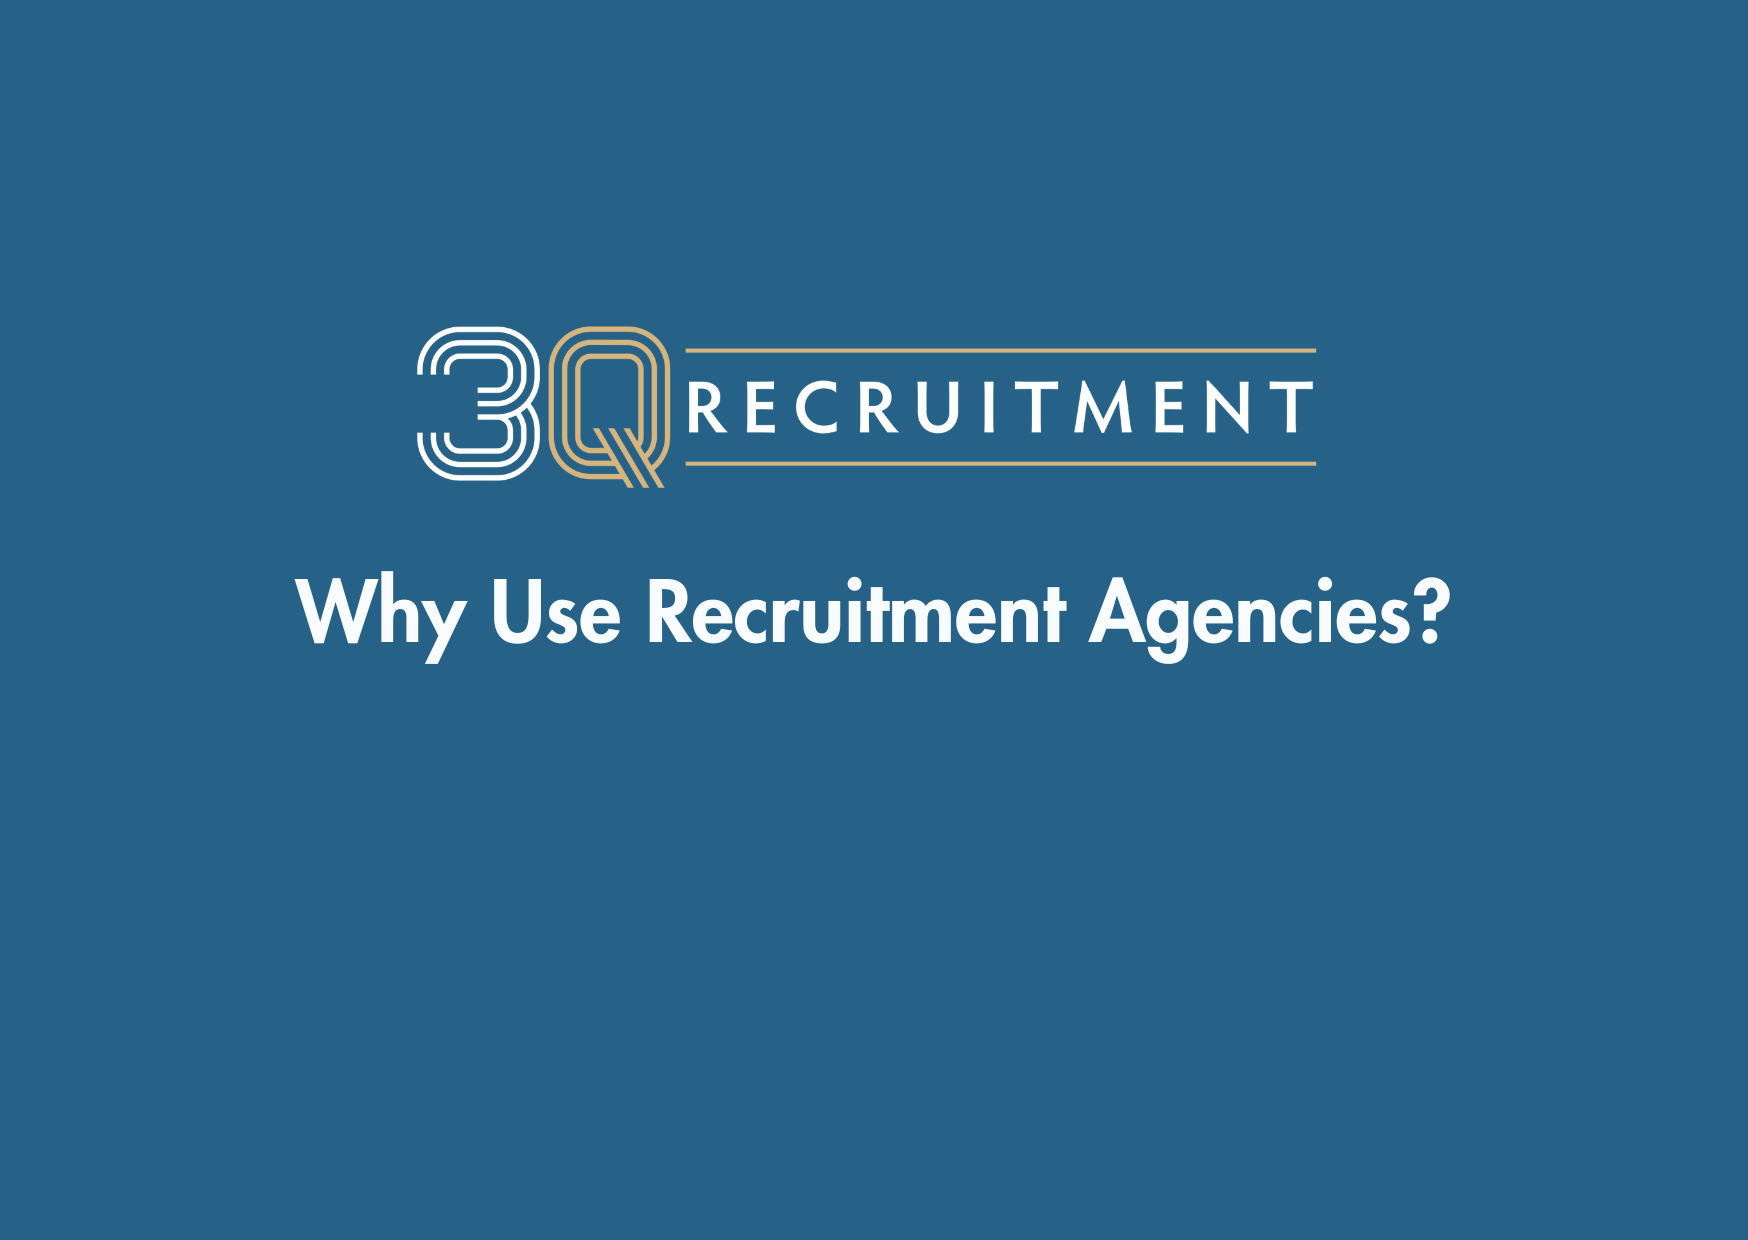 3Q Recruitment Why Use Recruitment Agencies?